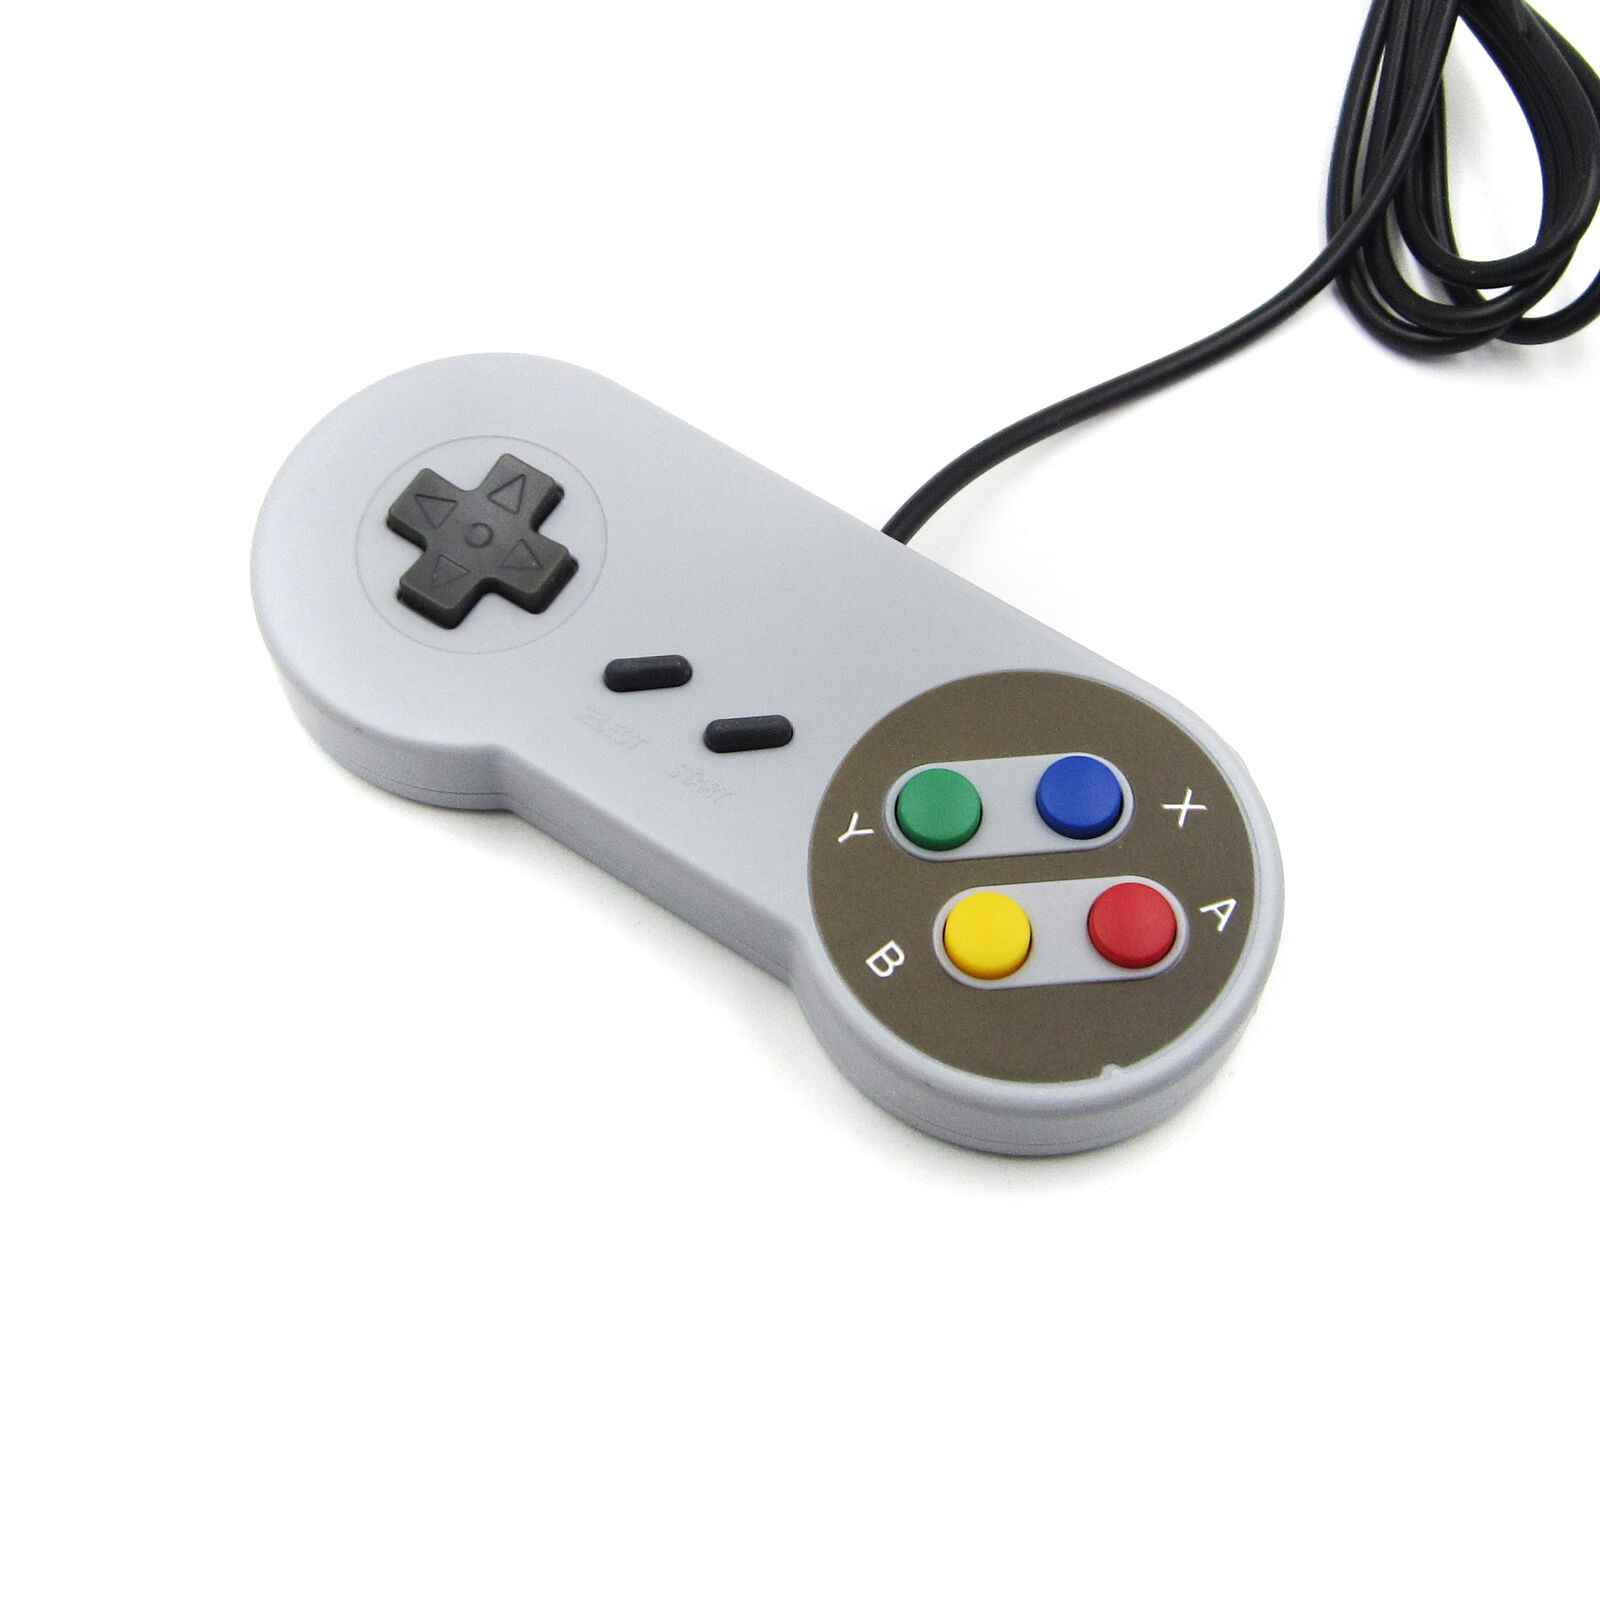 Super USB Controller Retro Gamepad Joypad For Nintendo SNES PC Windows Mac